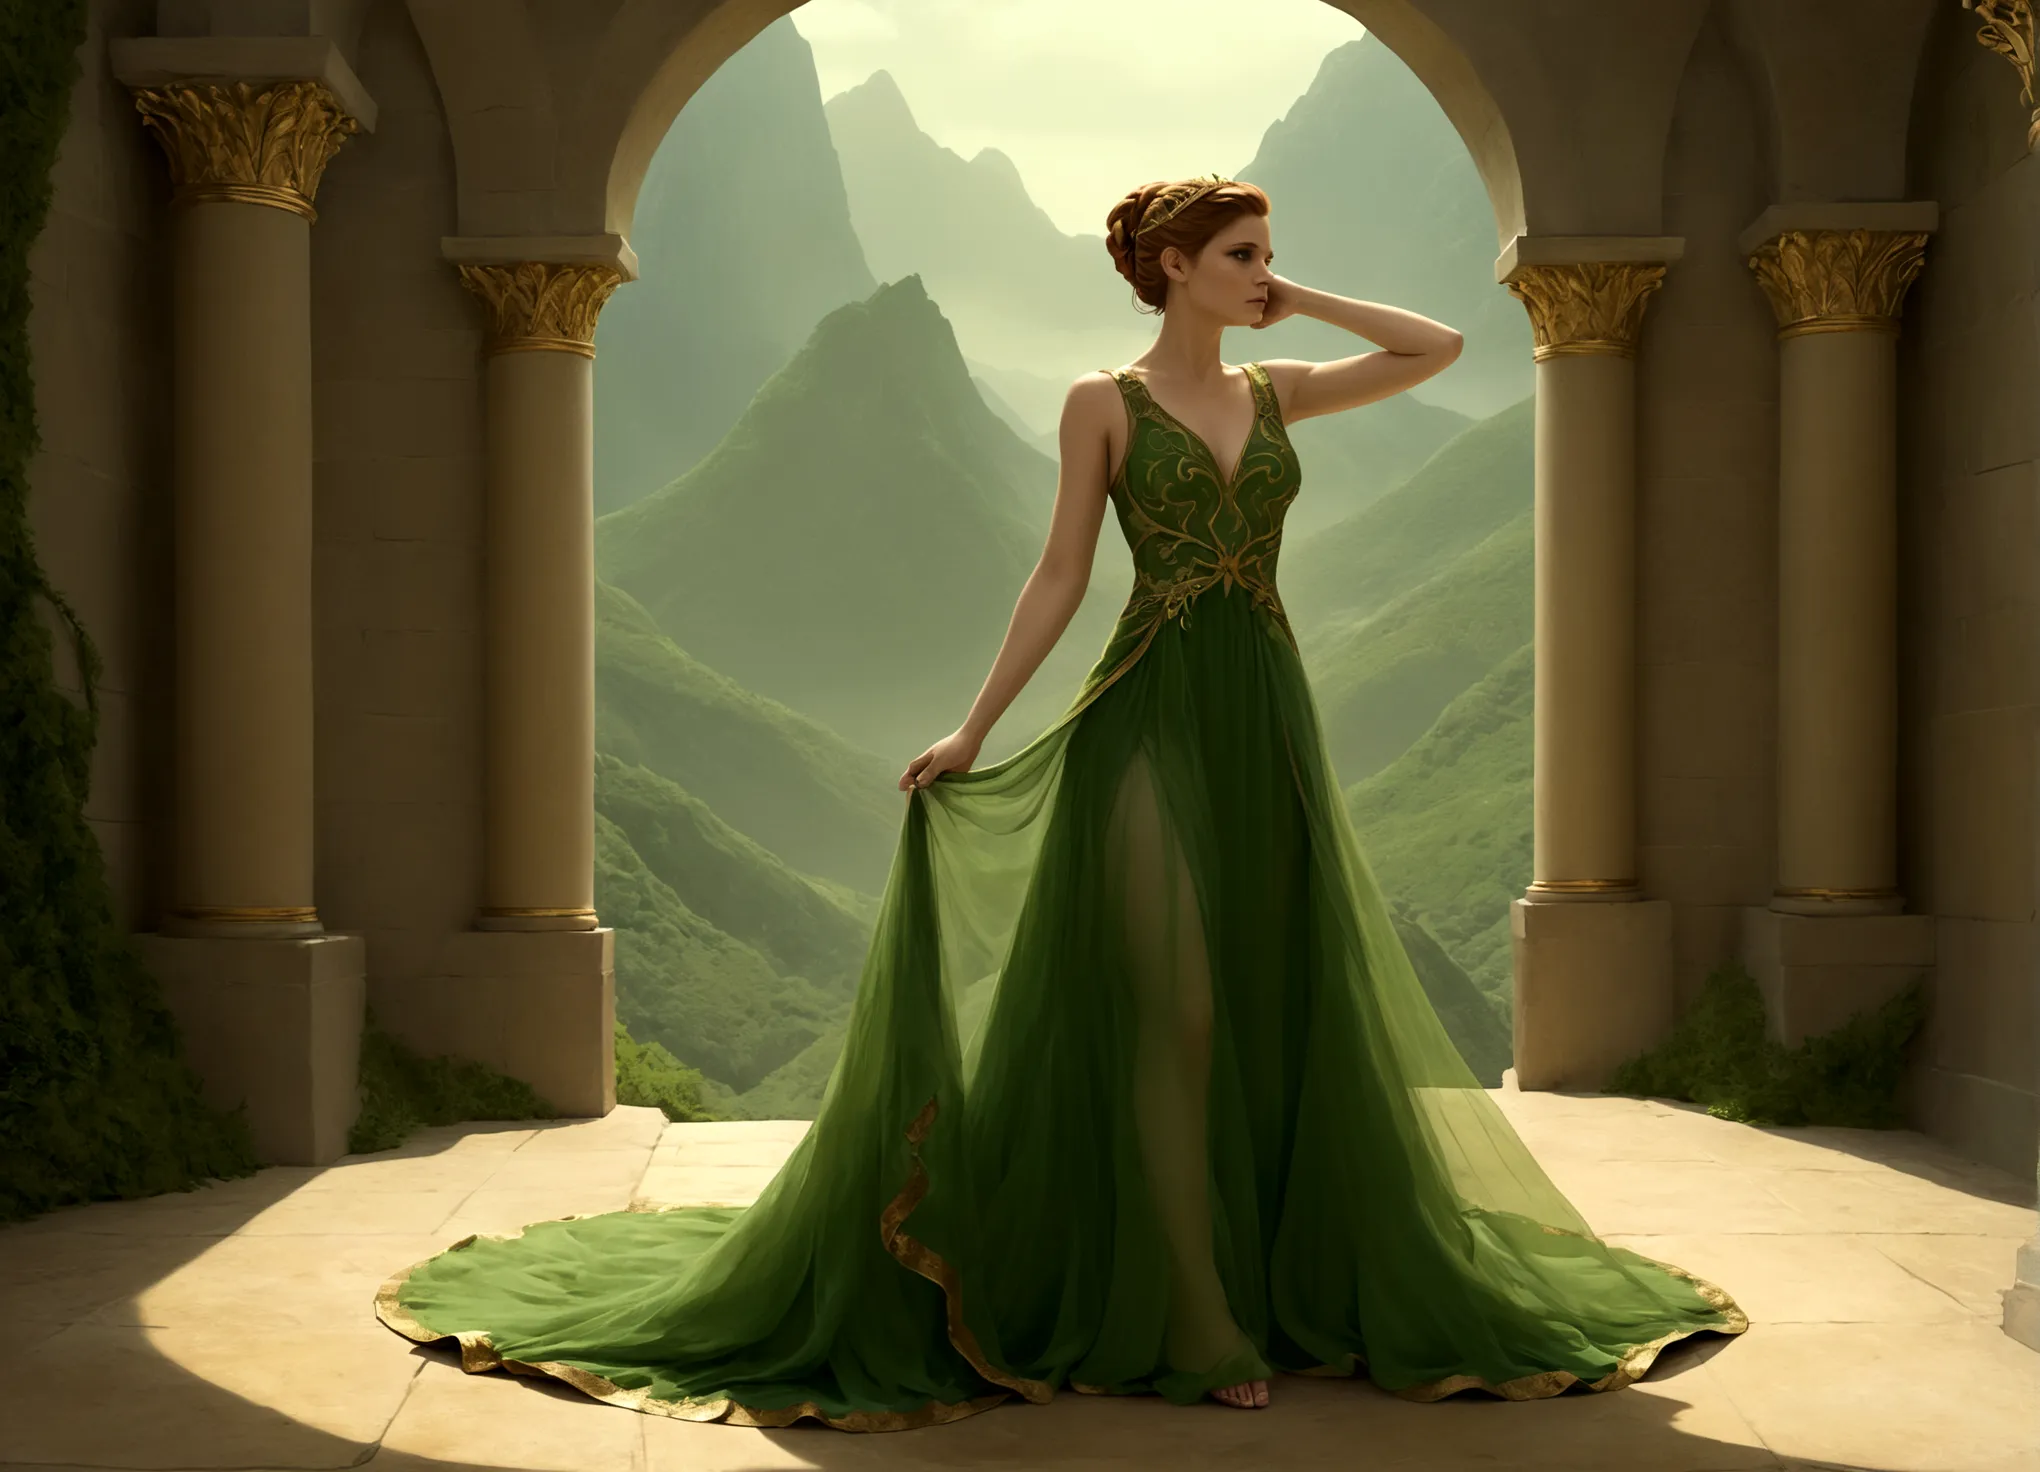 The Damsel in Distress (Kate Mara 25, sheer green dress gold trim, nude underneath) Damsel is flattering the dragon in its lair....